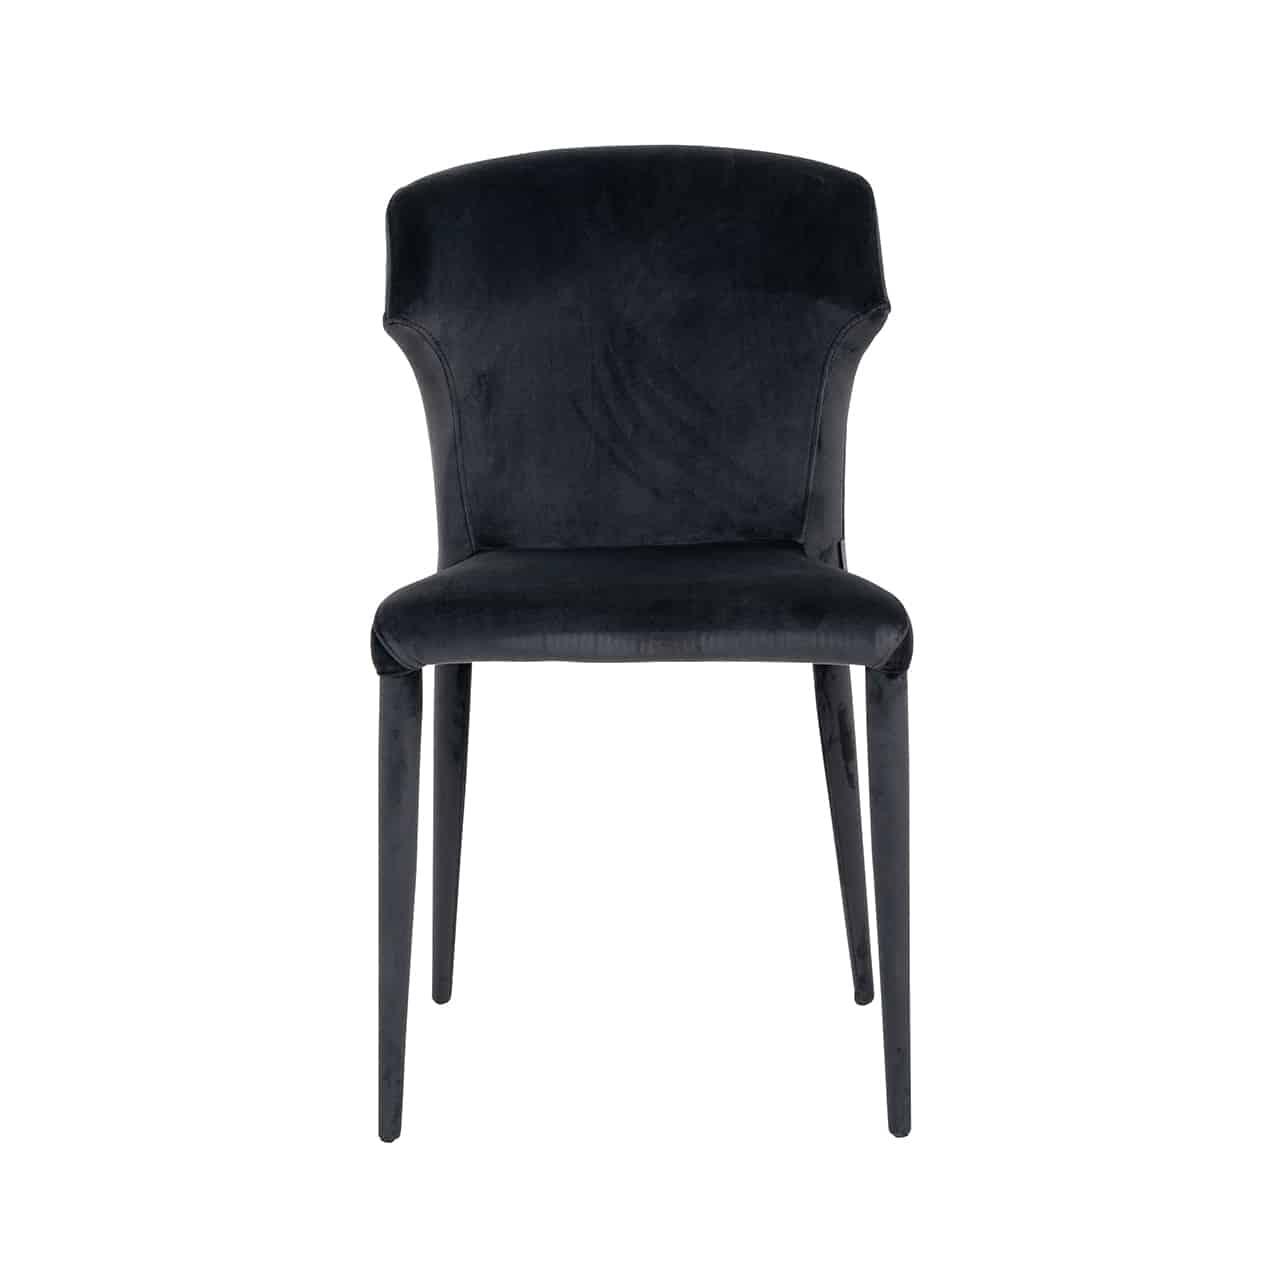 PIPER chair black - Eye on Design